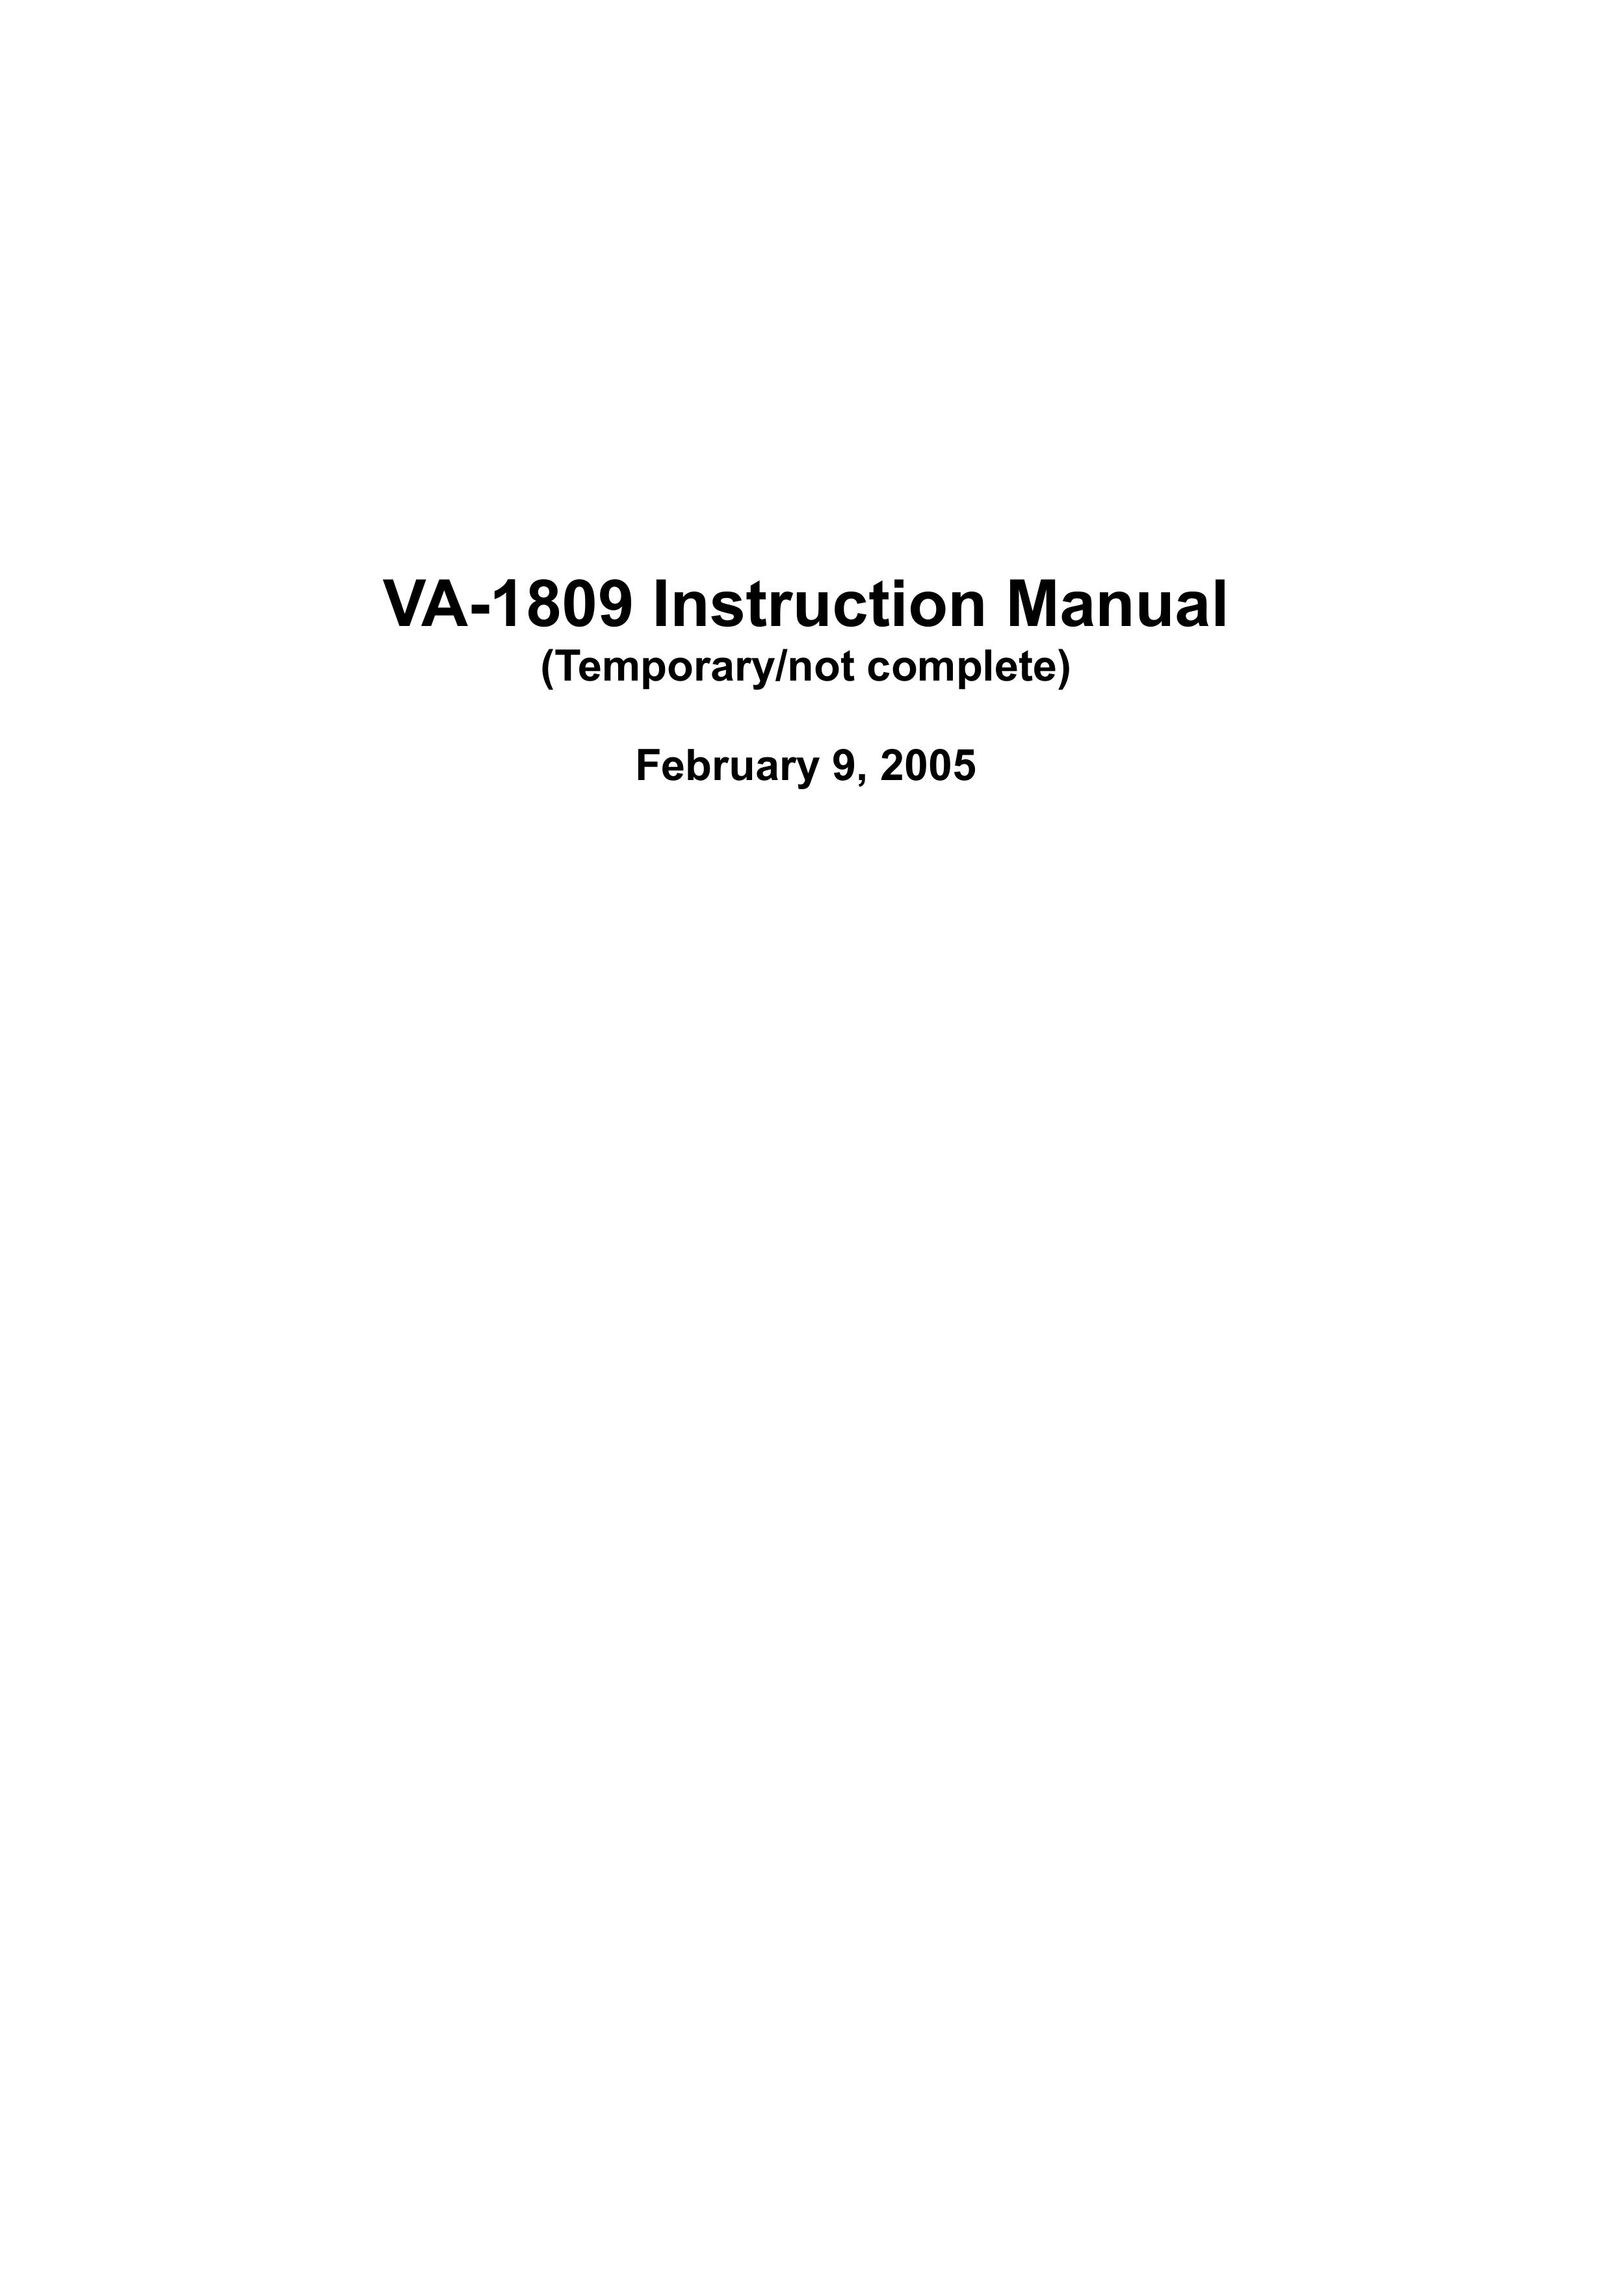 HP (Hewlett-Packard) VA-1809 Stereo Receiver User Manual